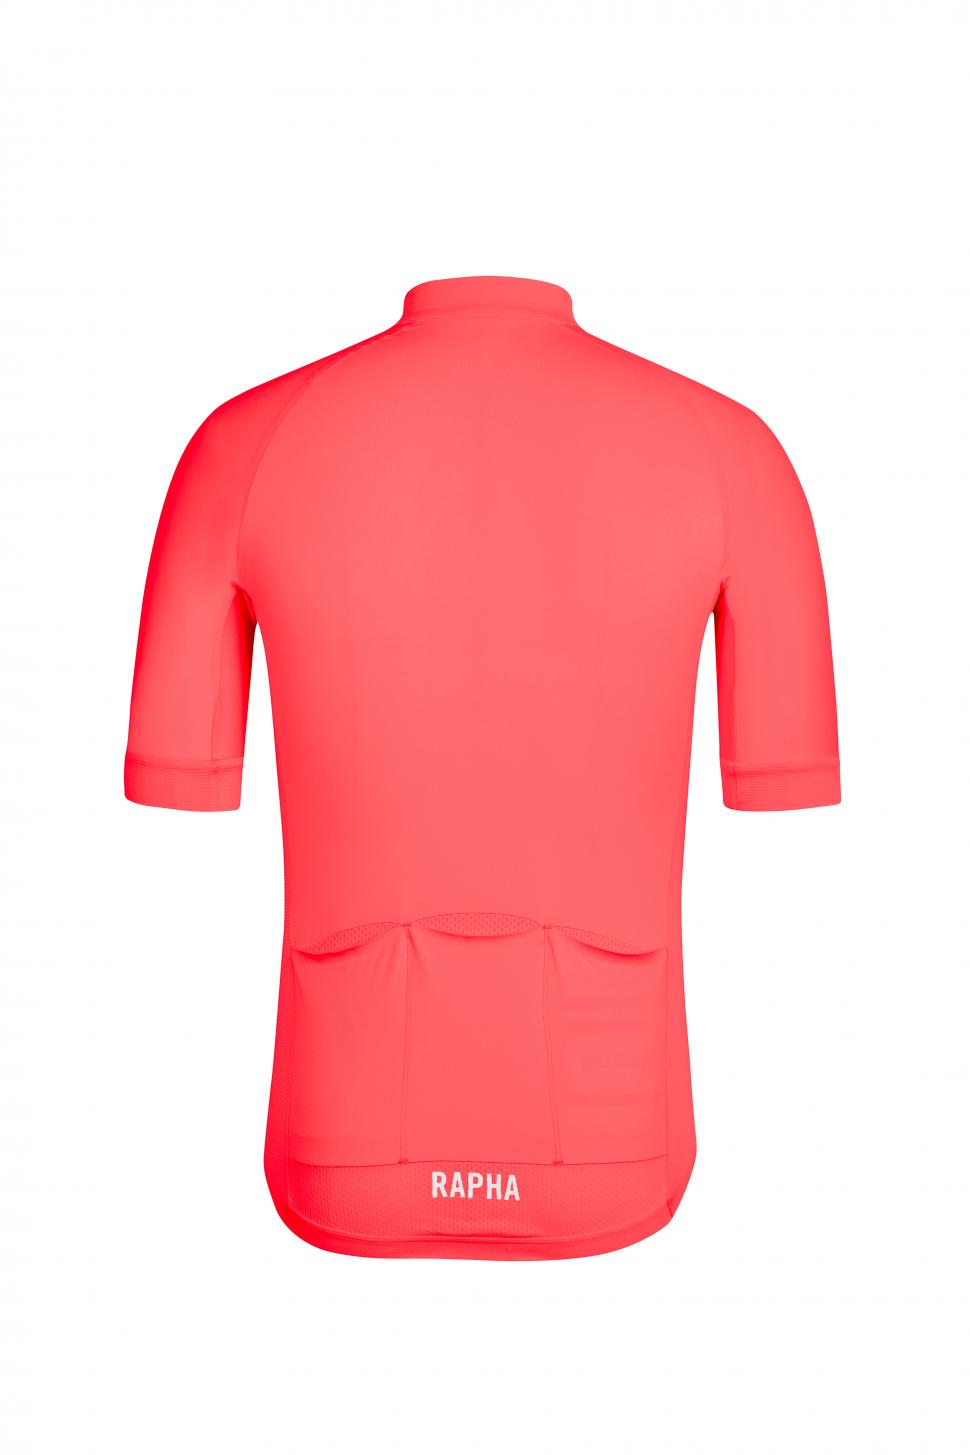 Rapha goes aero with new Pro Team Aero Suit and Aero Jersey | road.cc